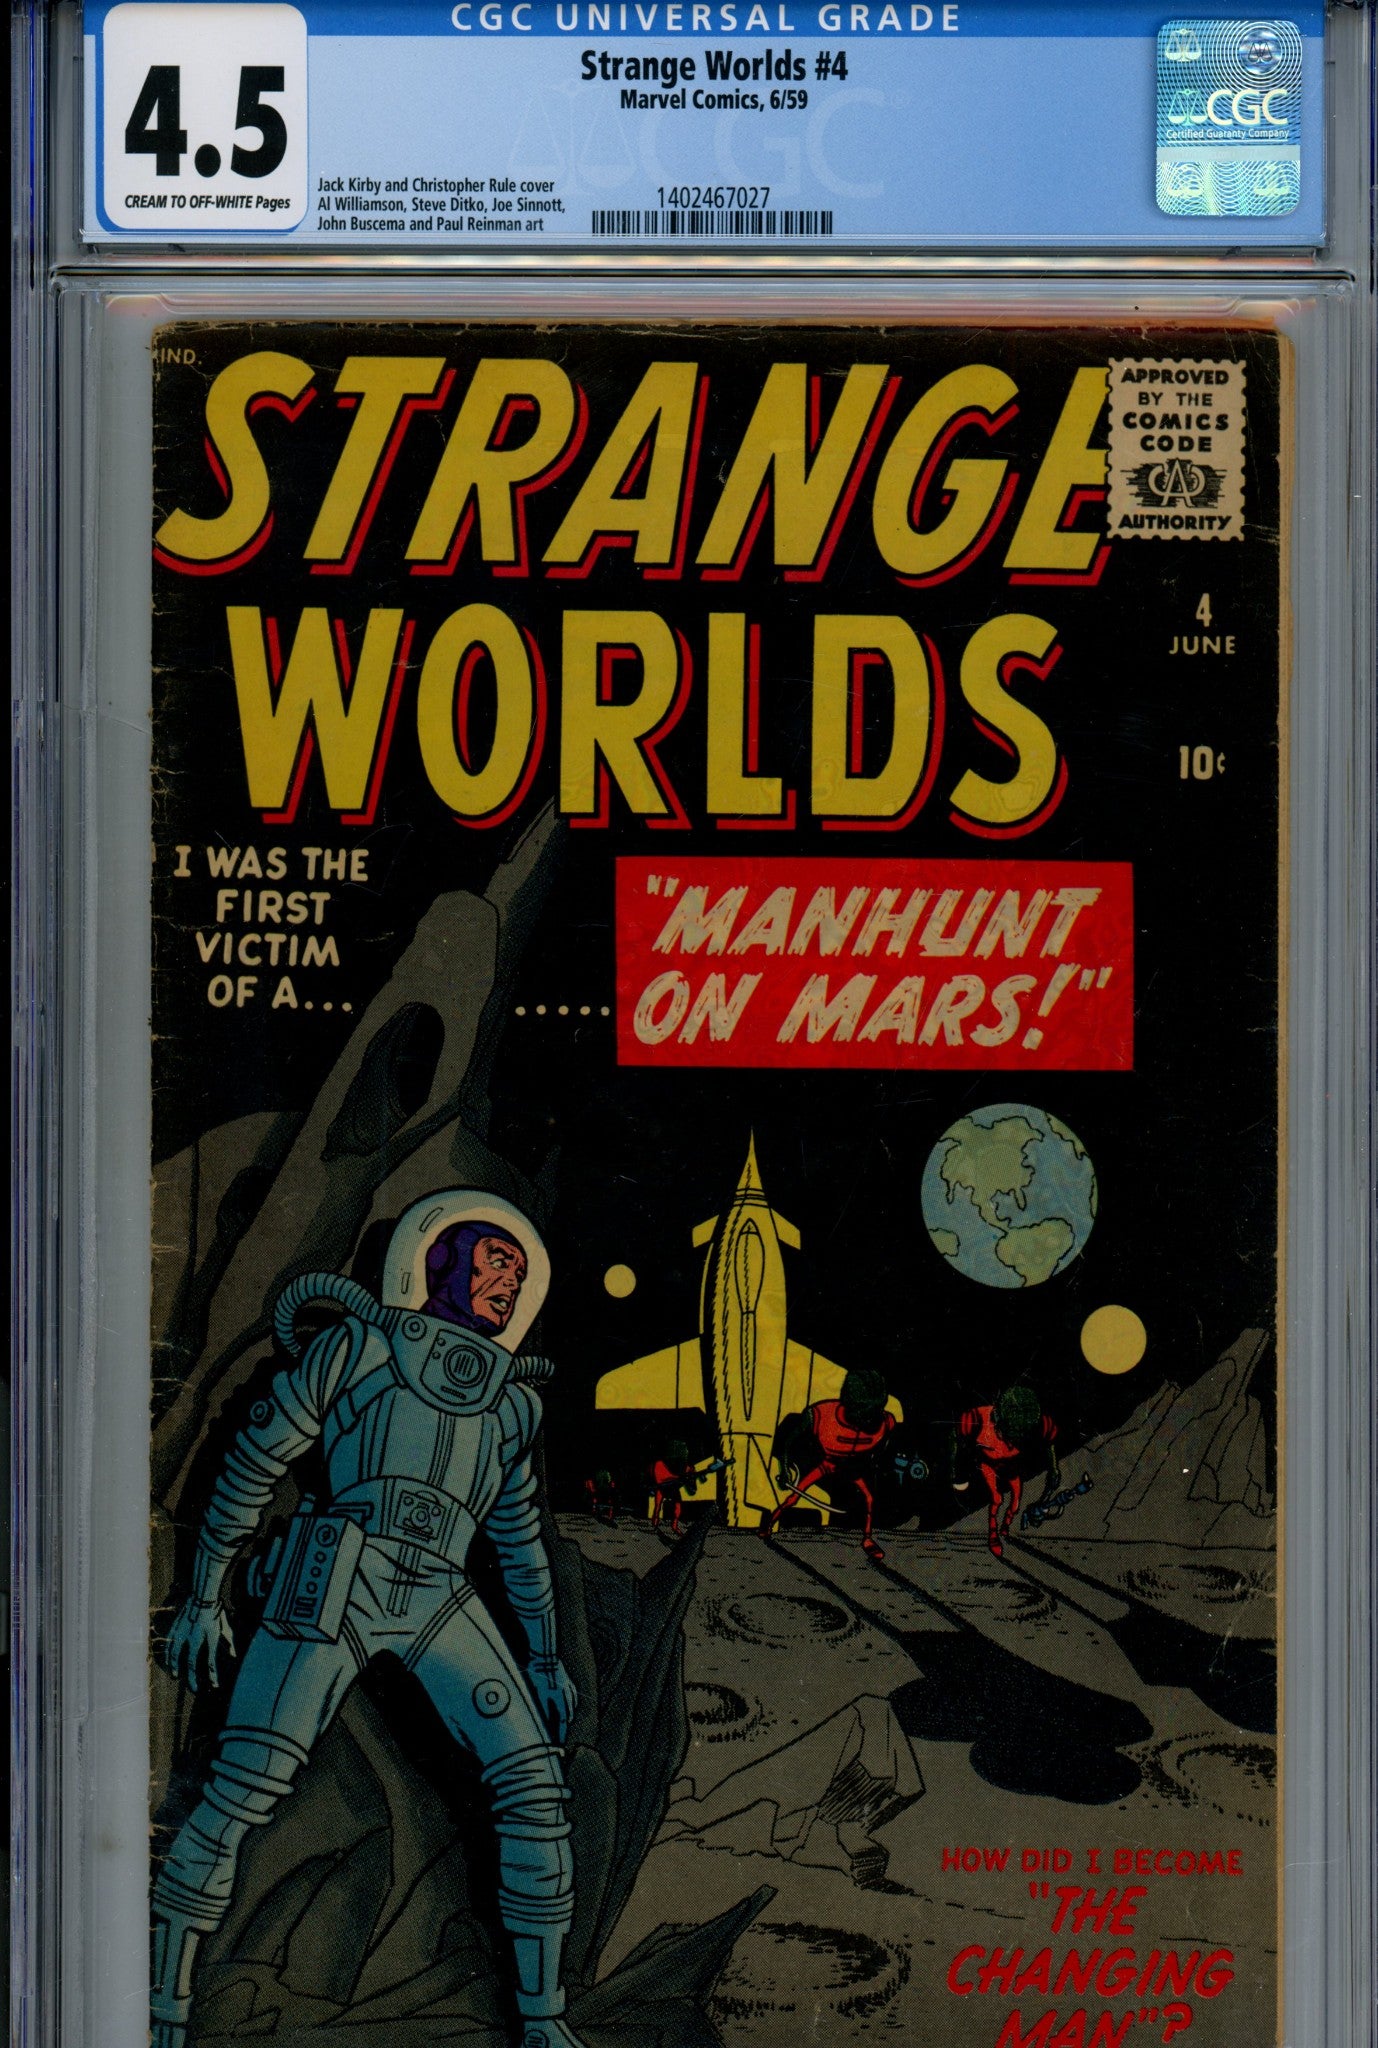 Strange Worlds 4 CGC 4.5 (VG+) (1959) 